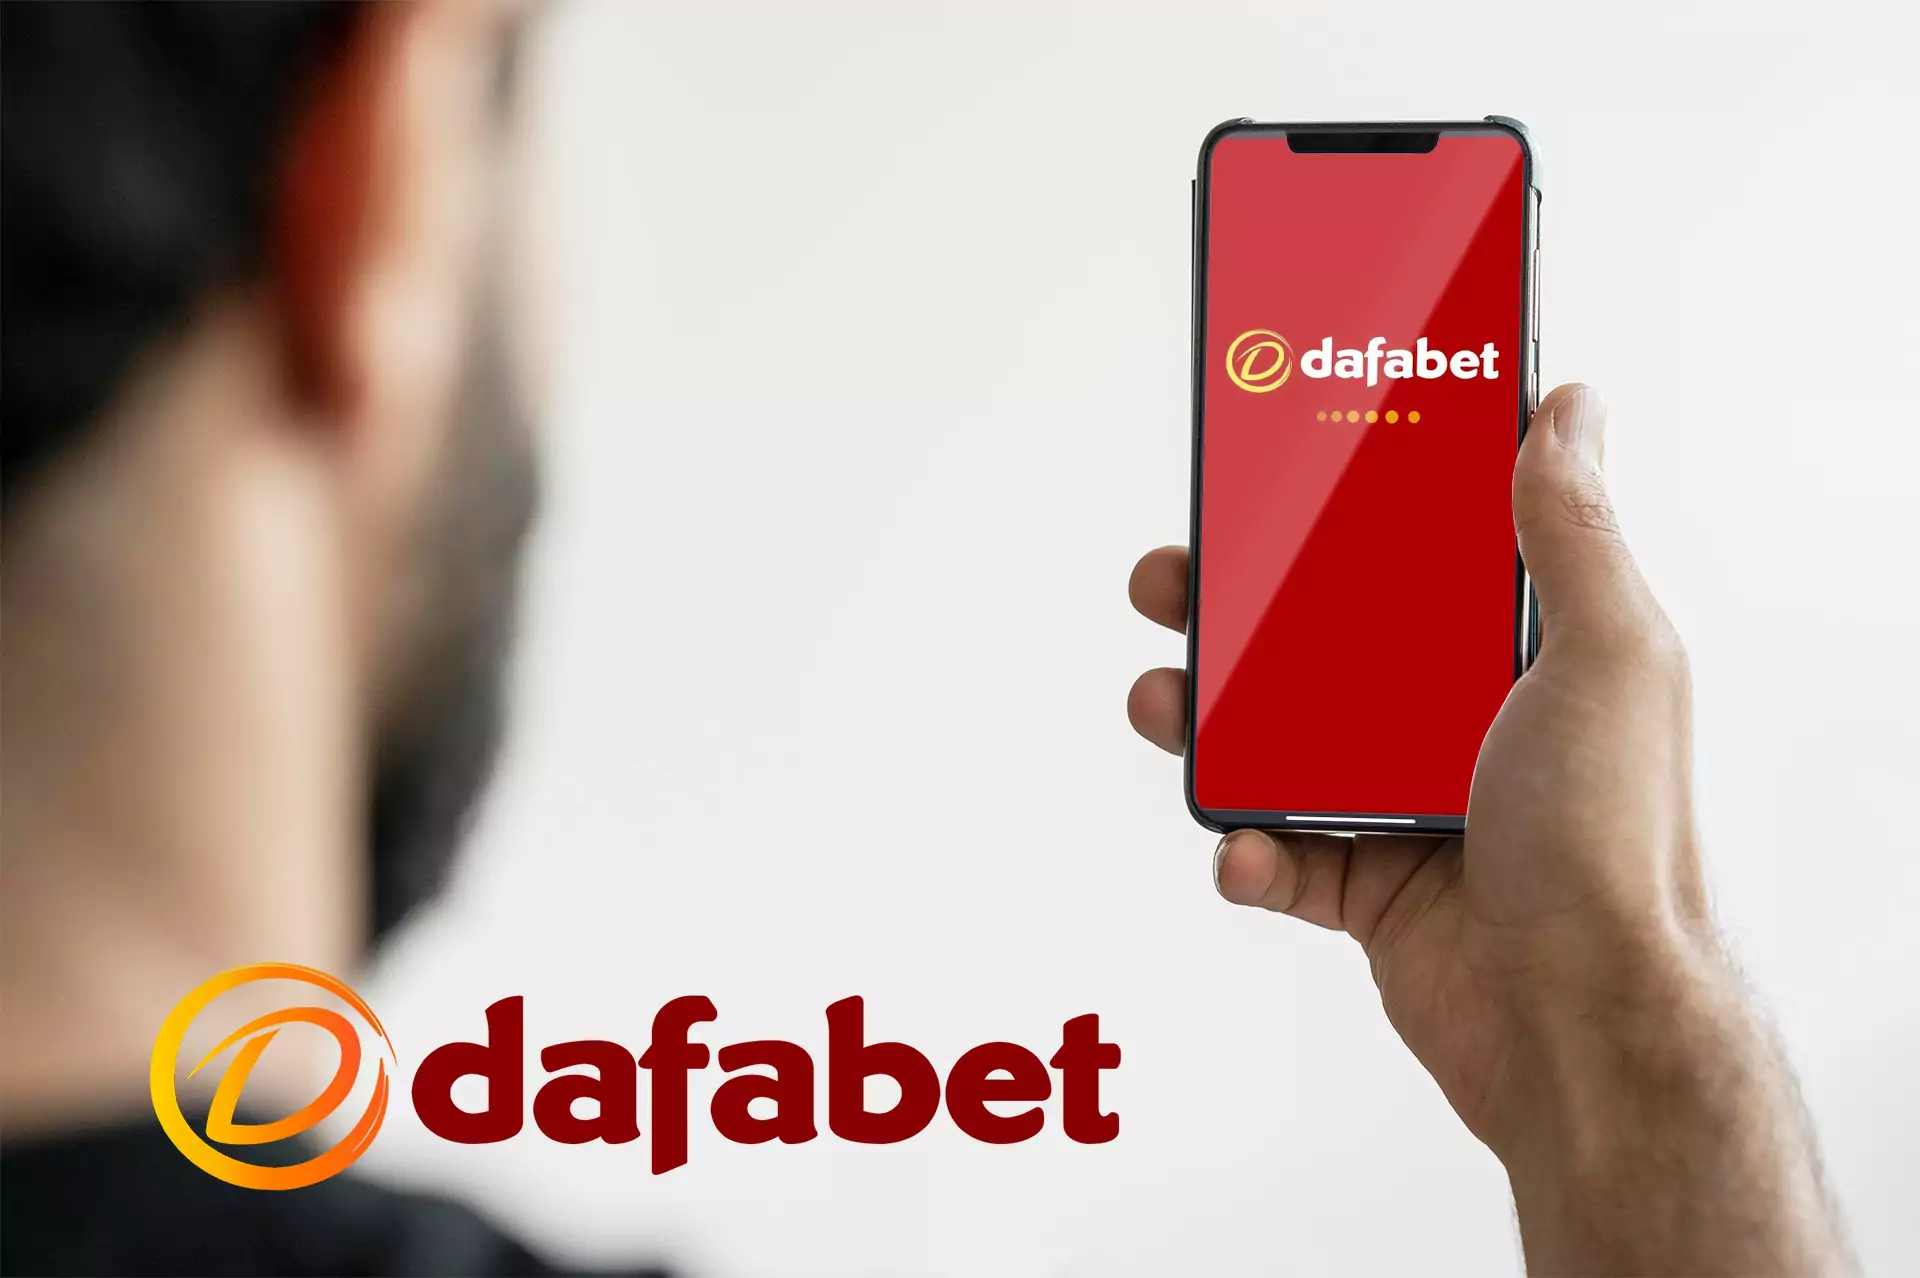 Register at Dafabet and start betting oc cricket via mobile app.